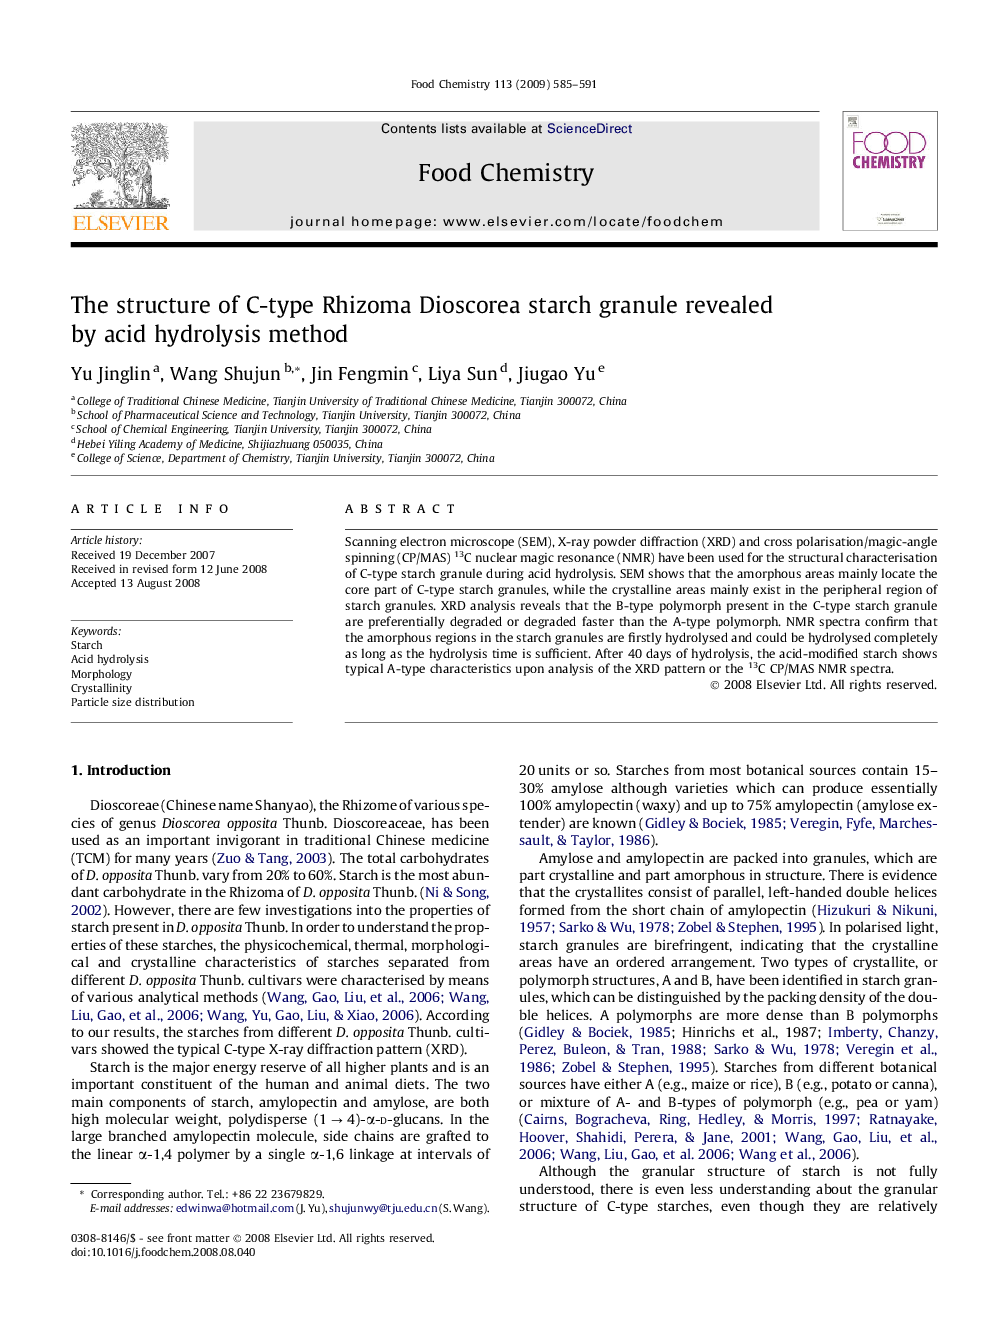 The structure of C-type Rhizoma Dioscorea starch granule revealed by acid hydrolysis method